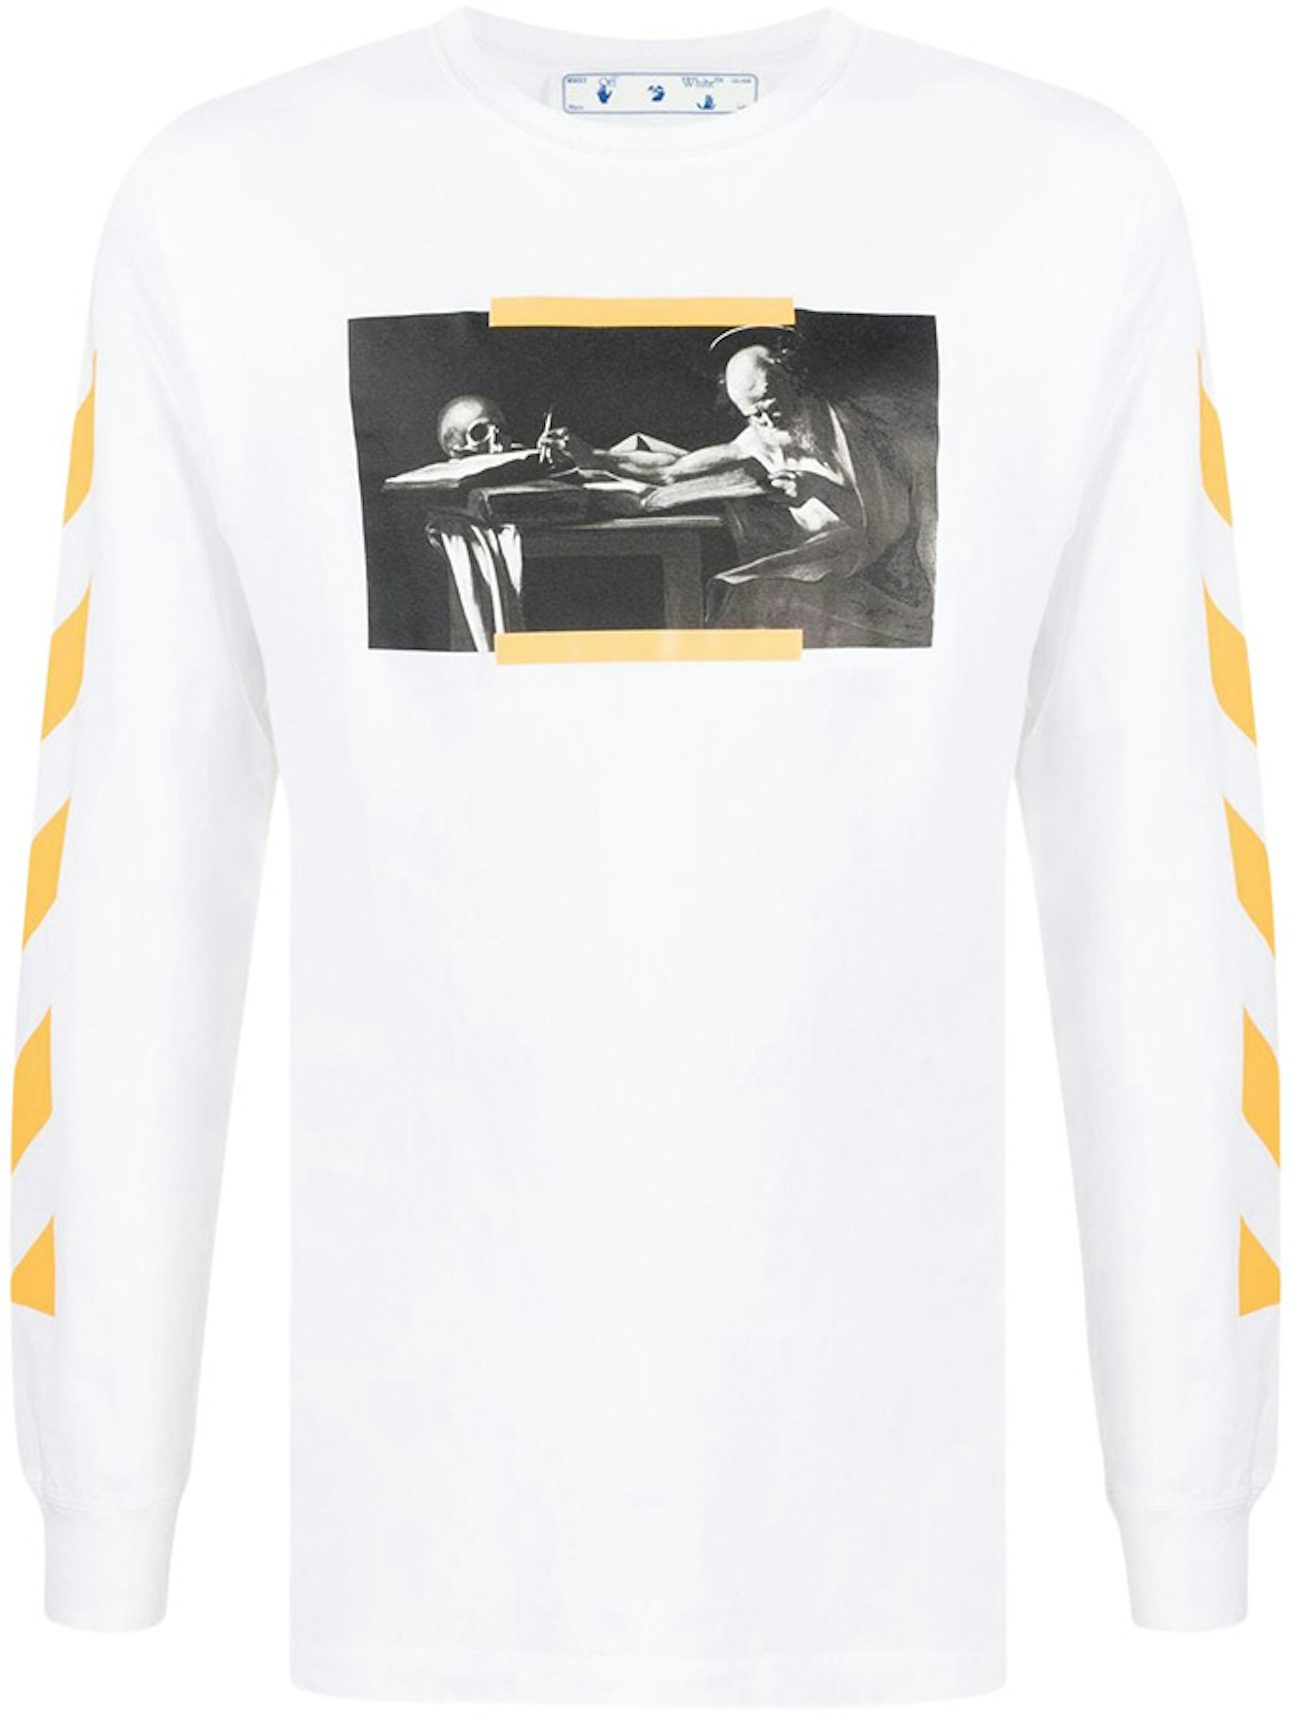 Off-White c/o Virgil Abloh Long Sleeve T-Shirt in Yellow for Men